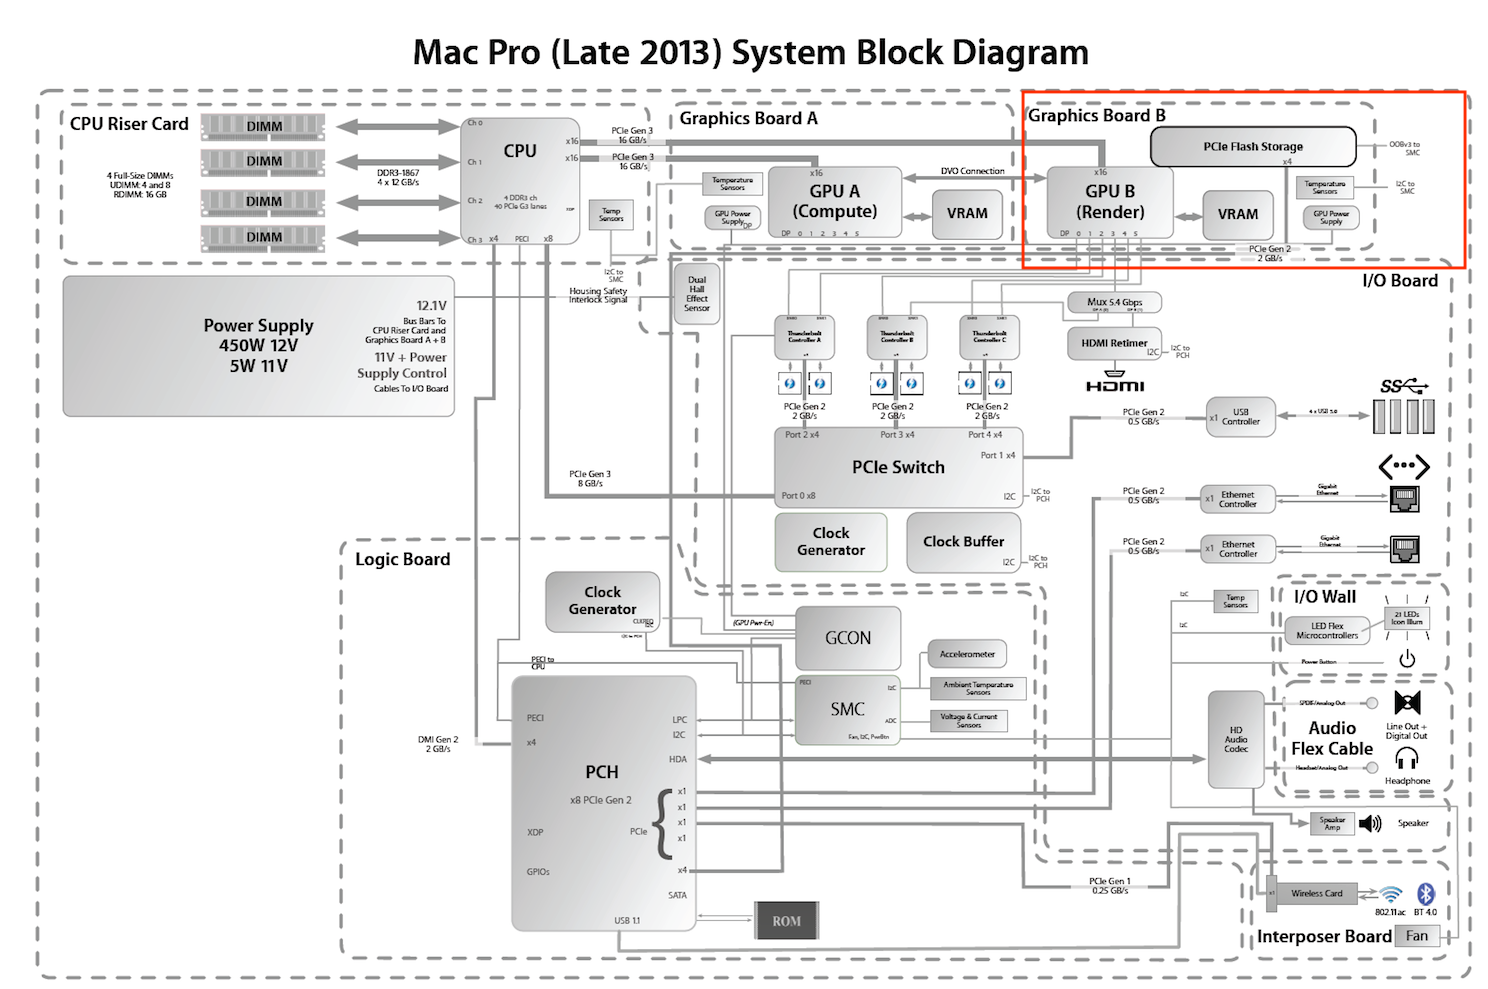 late-2013-mac-pro-system-block-diagram.png